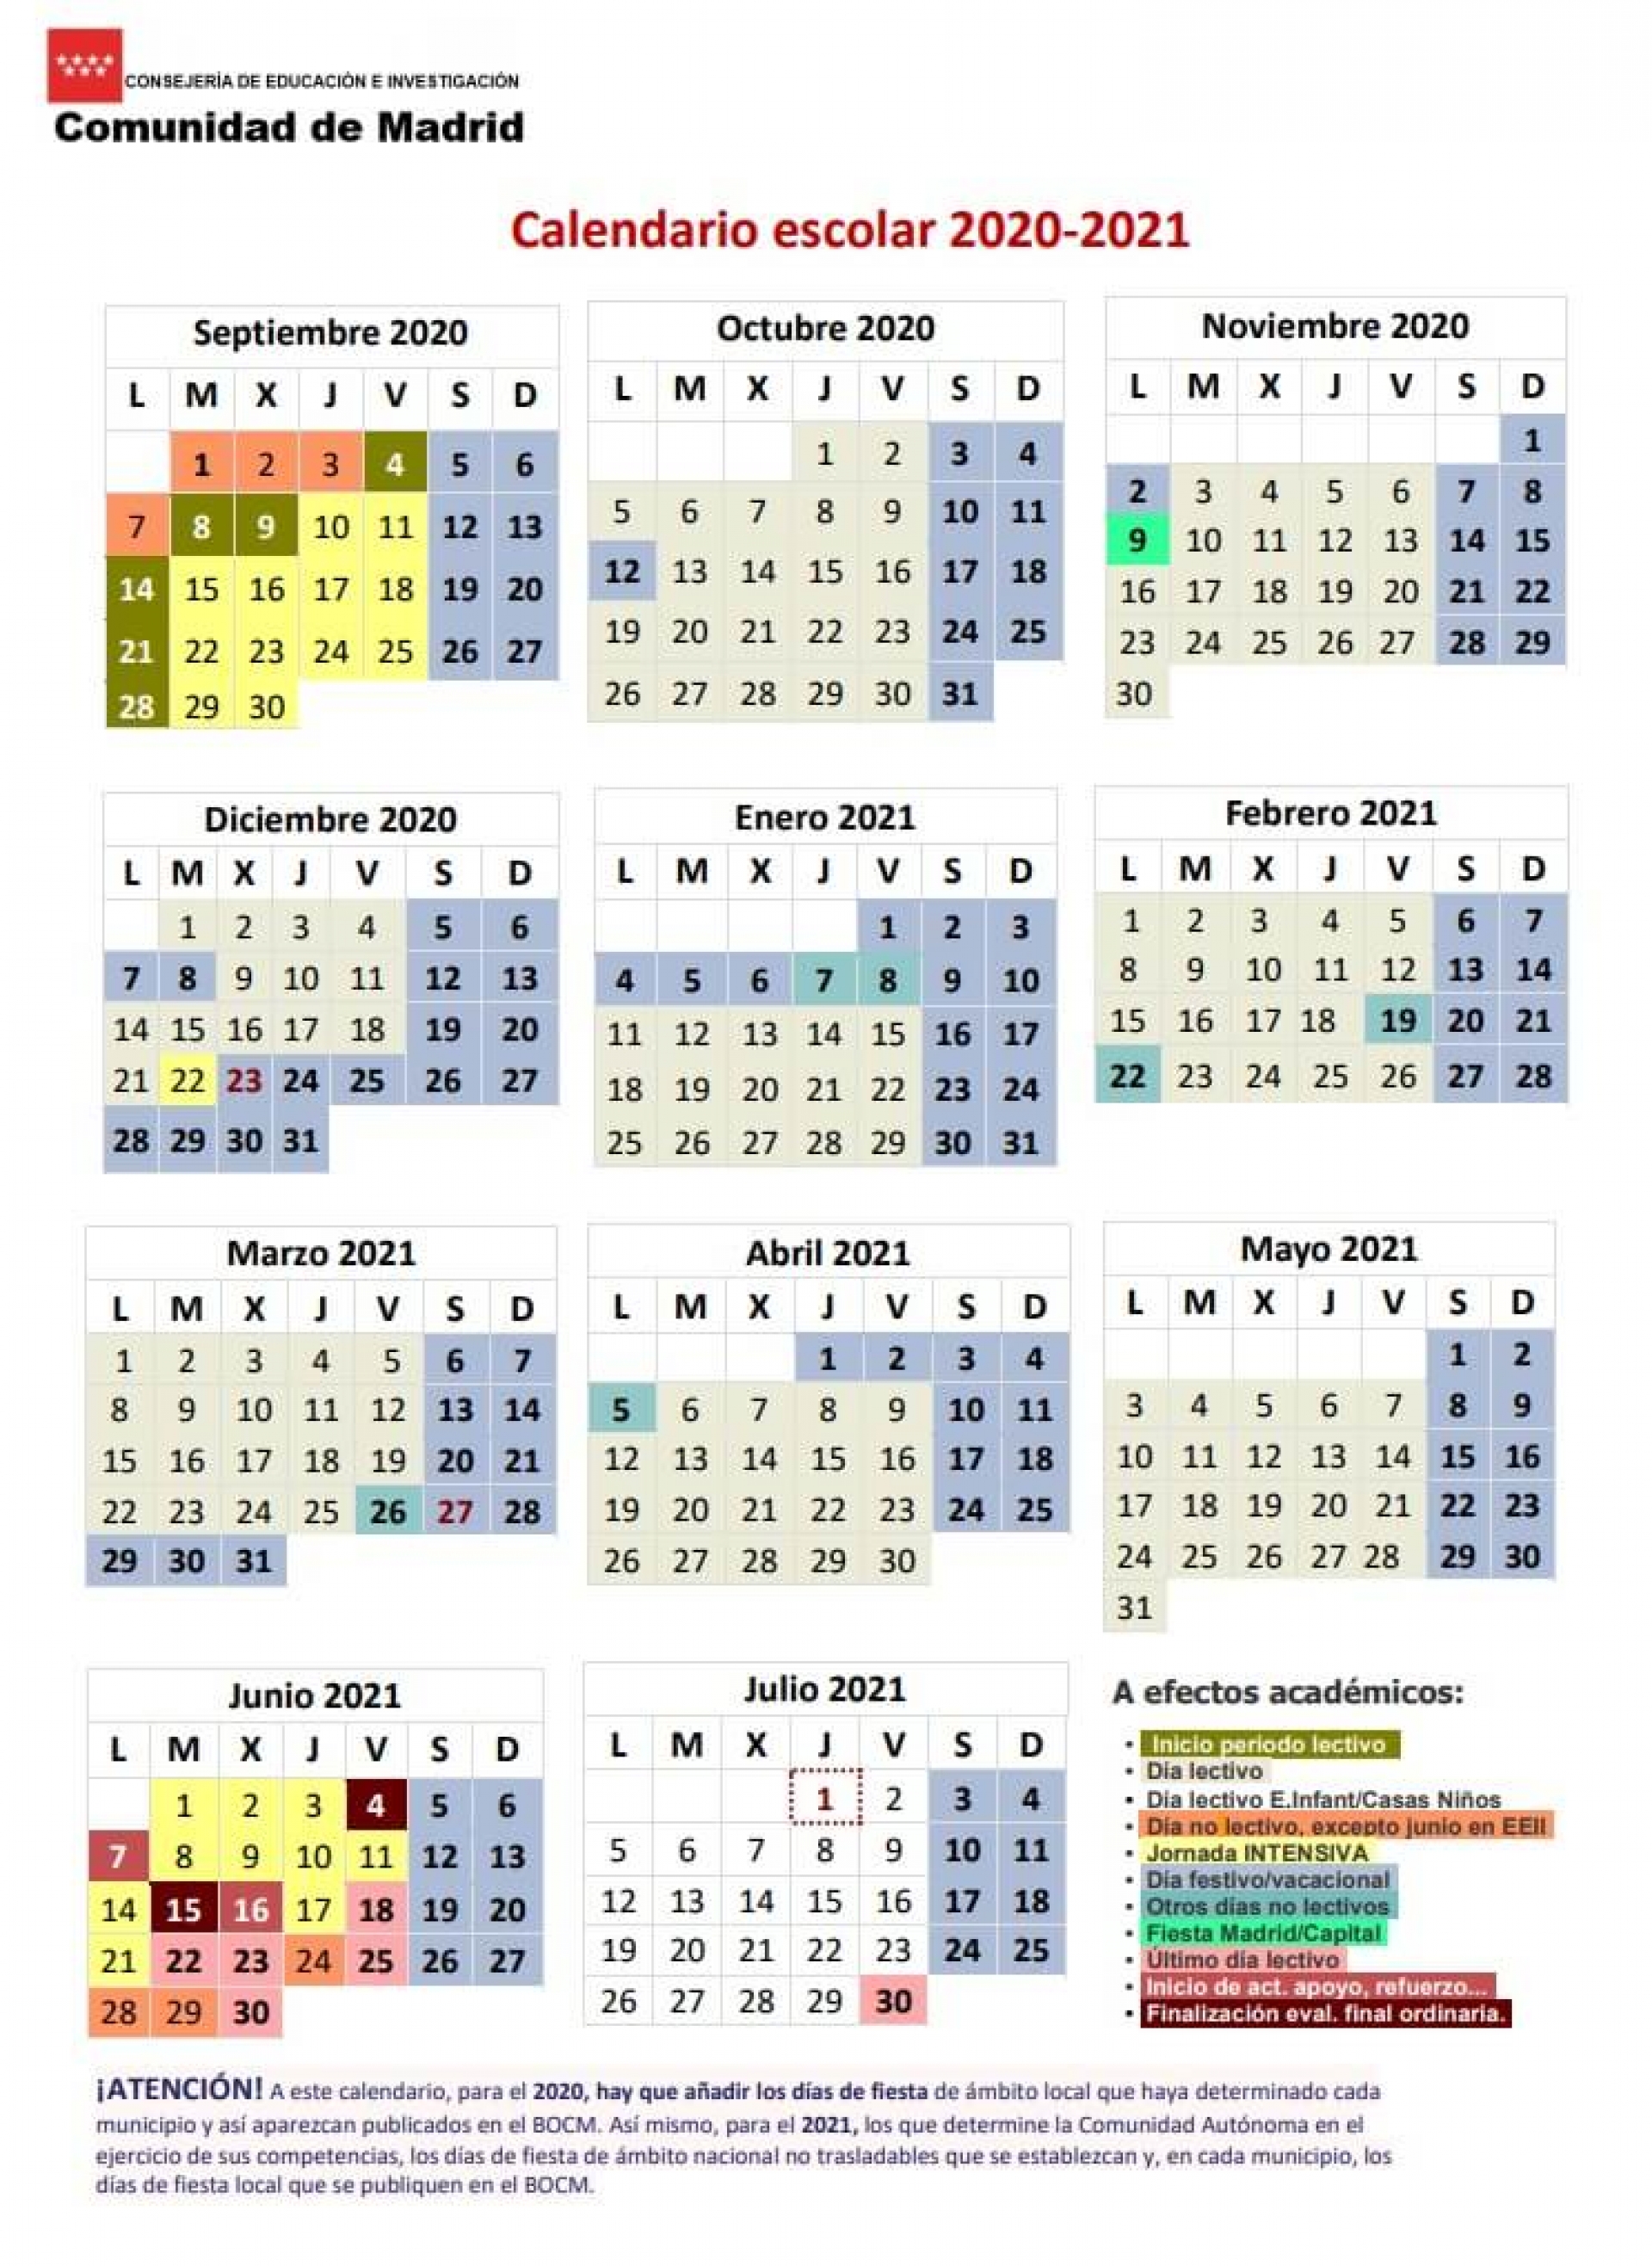 Учебный календарь 2021 года. Школьный календарь. Календарь школьника. Календарь каникул. Календарь школьных каникул.